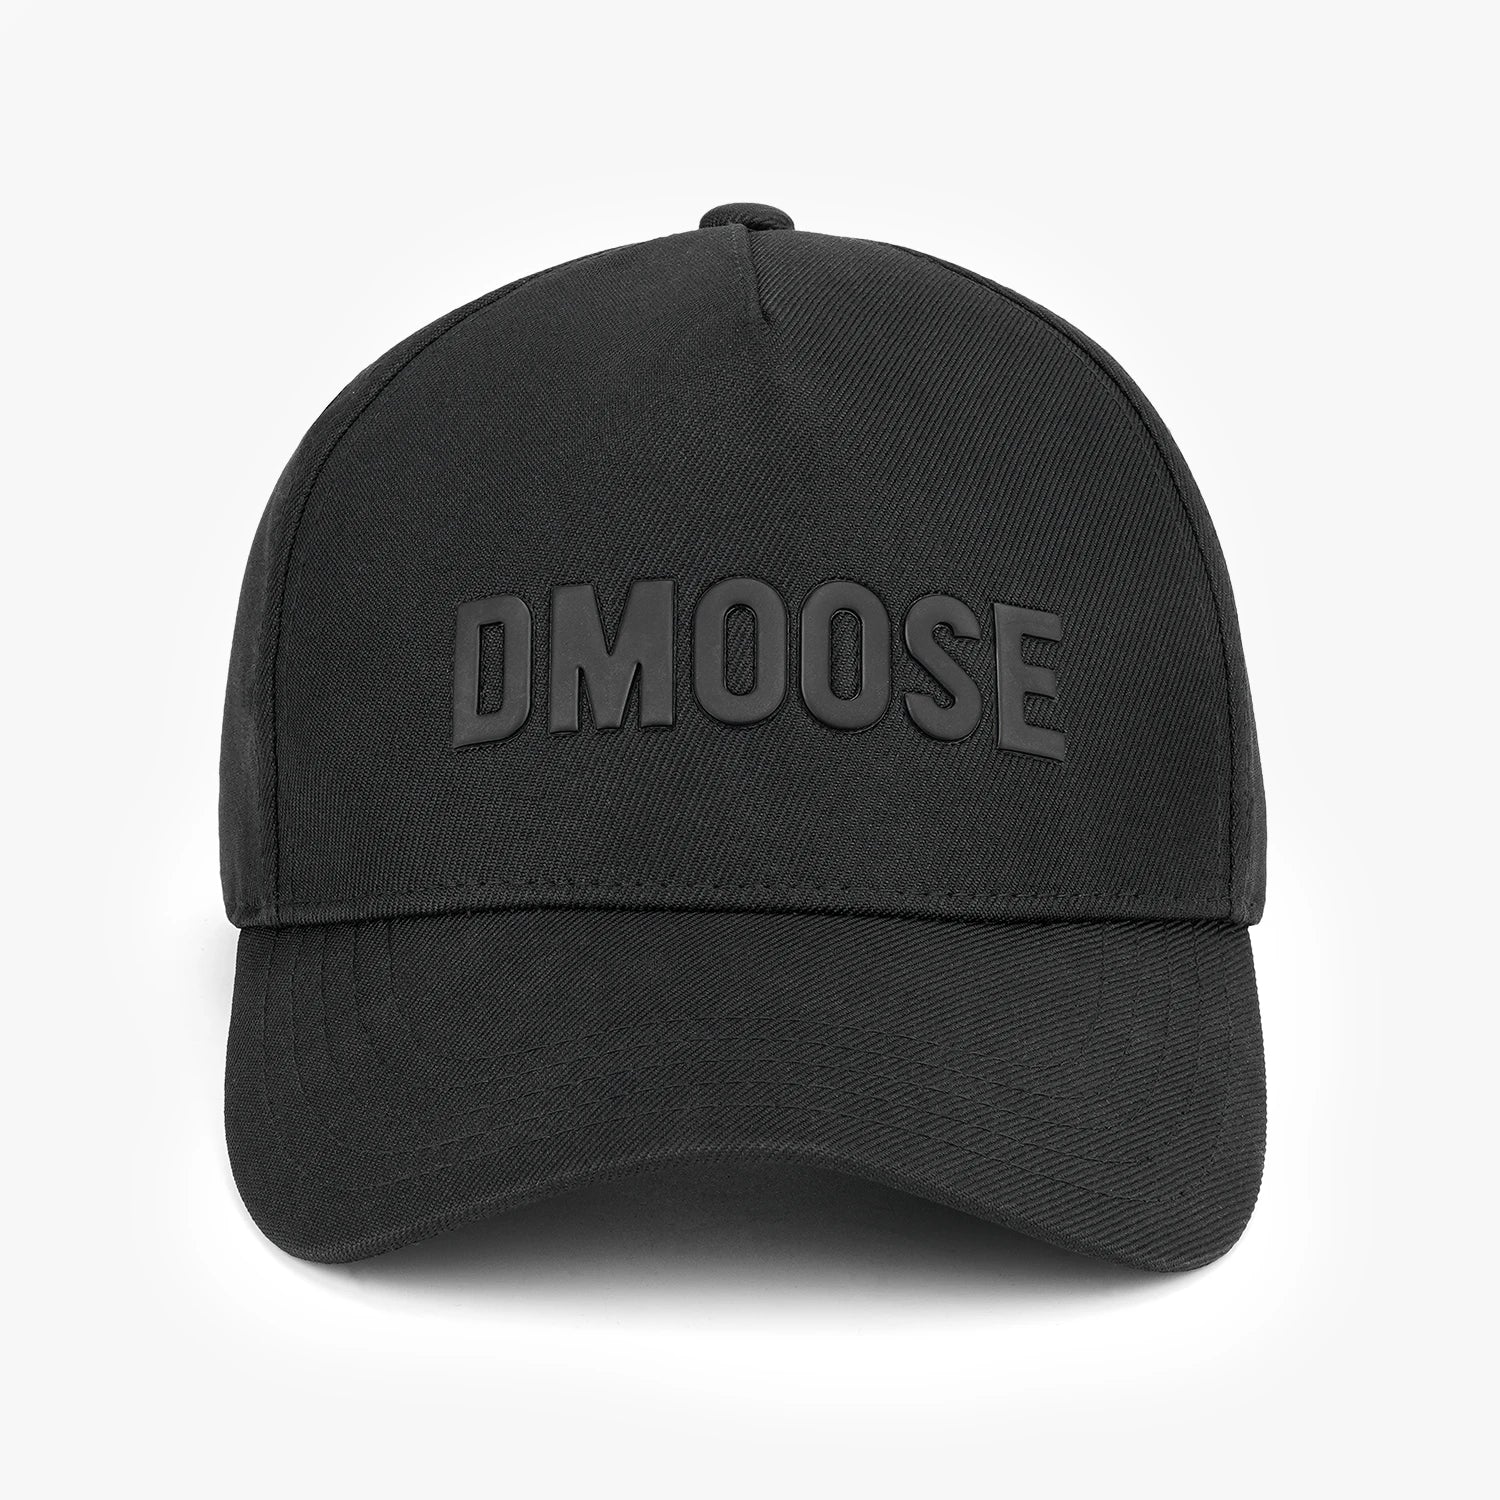 DMoose Black Trucker Hat